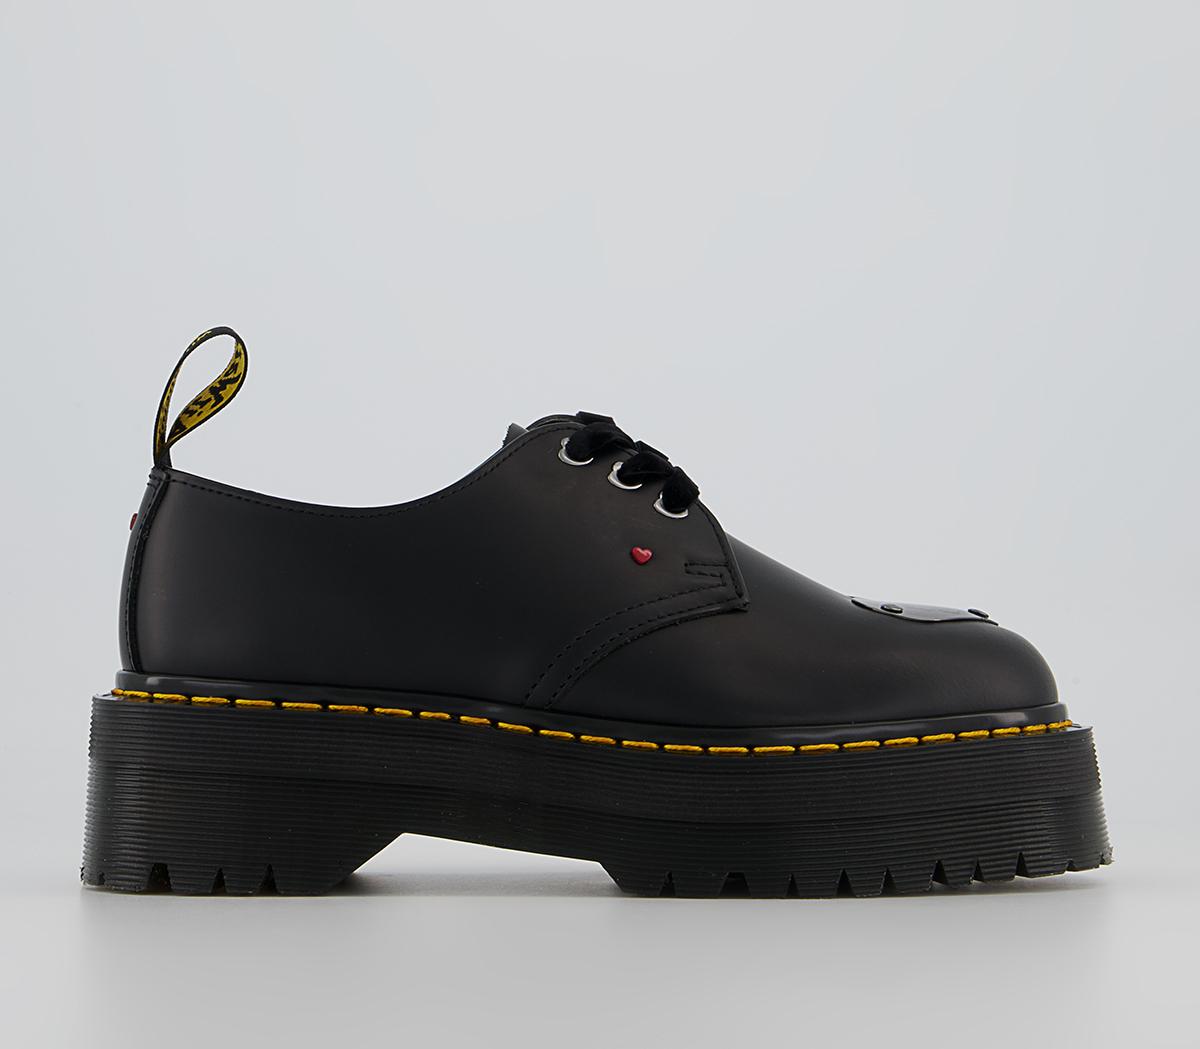 Dr. Martens 1461 Quad Betty Boop Shoes Black - Flat Shoes for Women